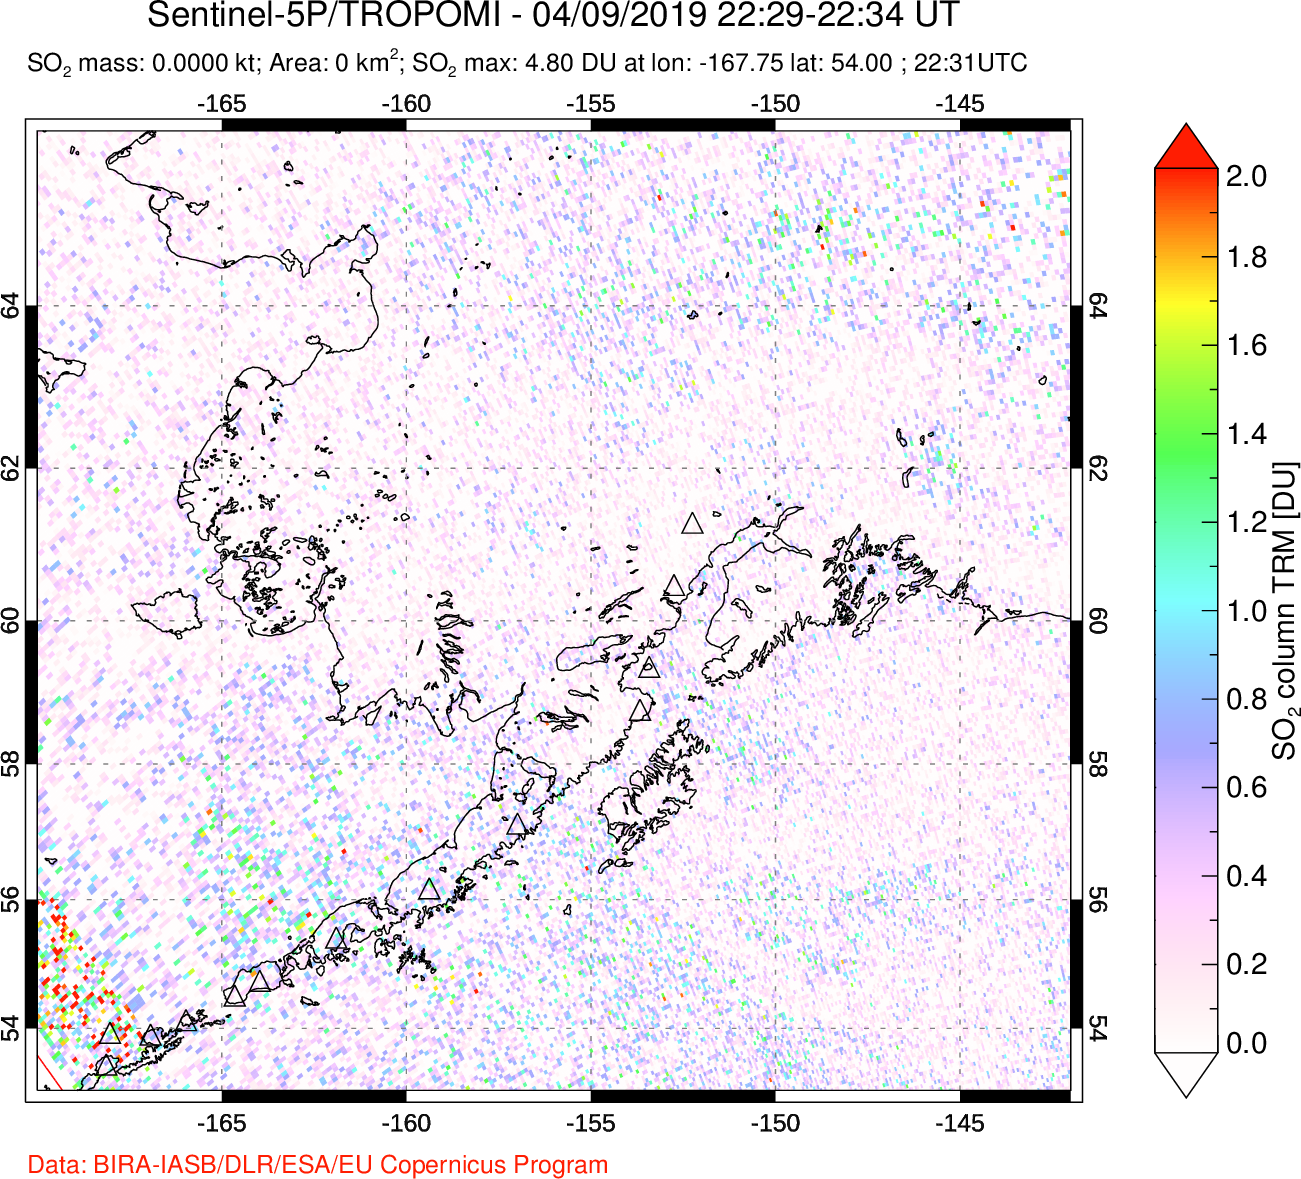 A sulfur dioxide image over Alaska, USA on Apr 09, 2019.